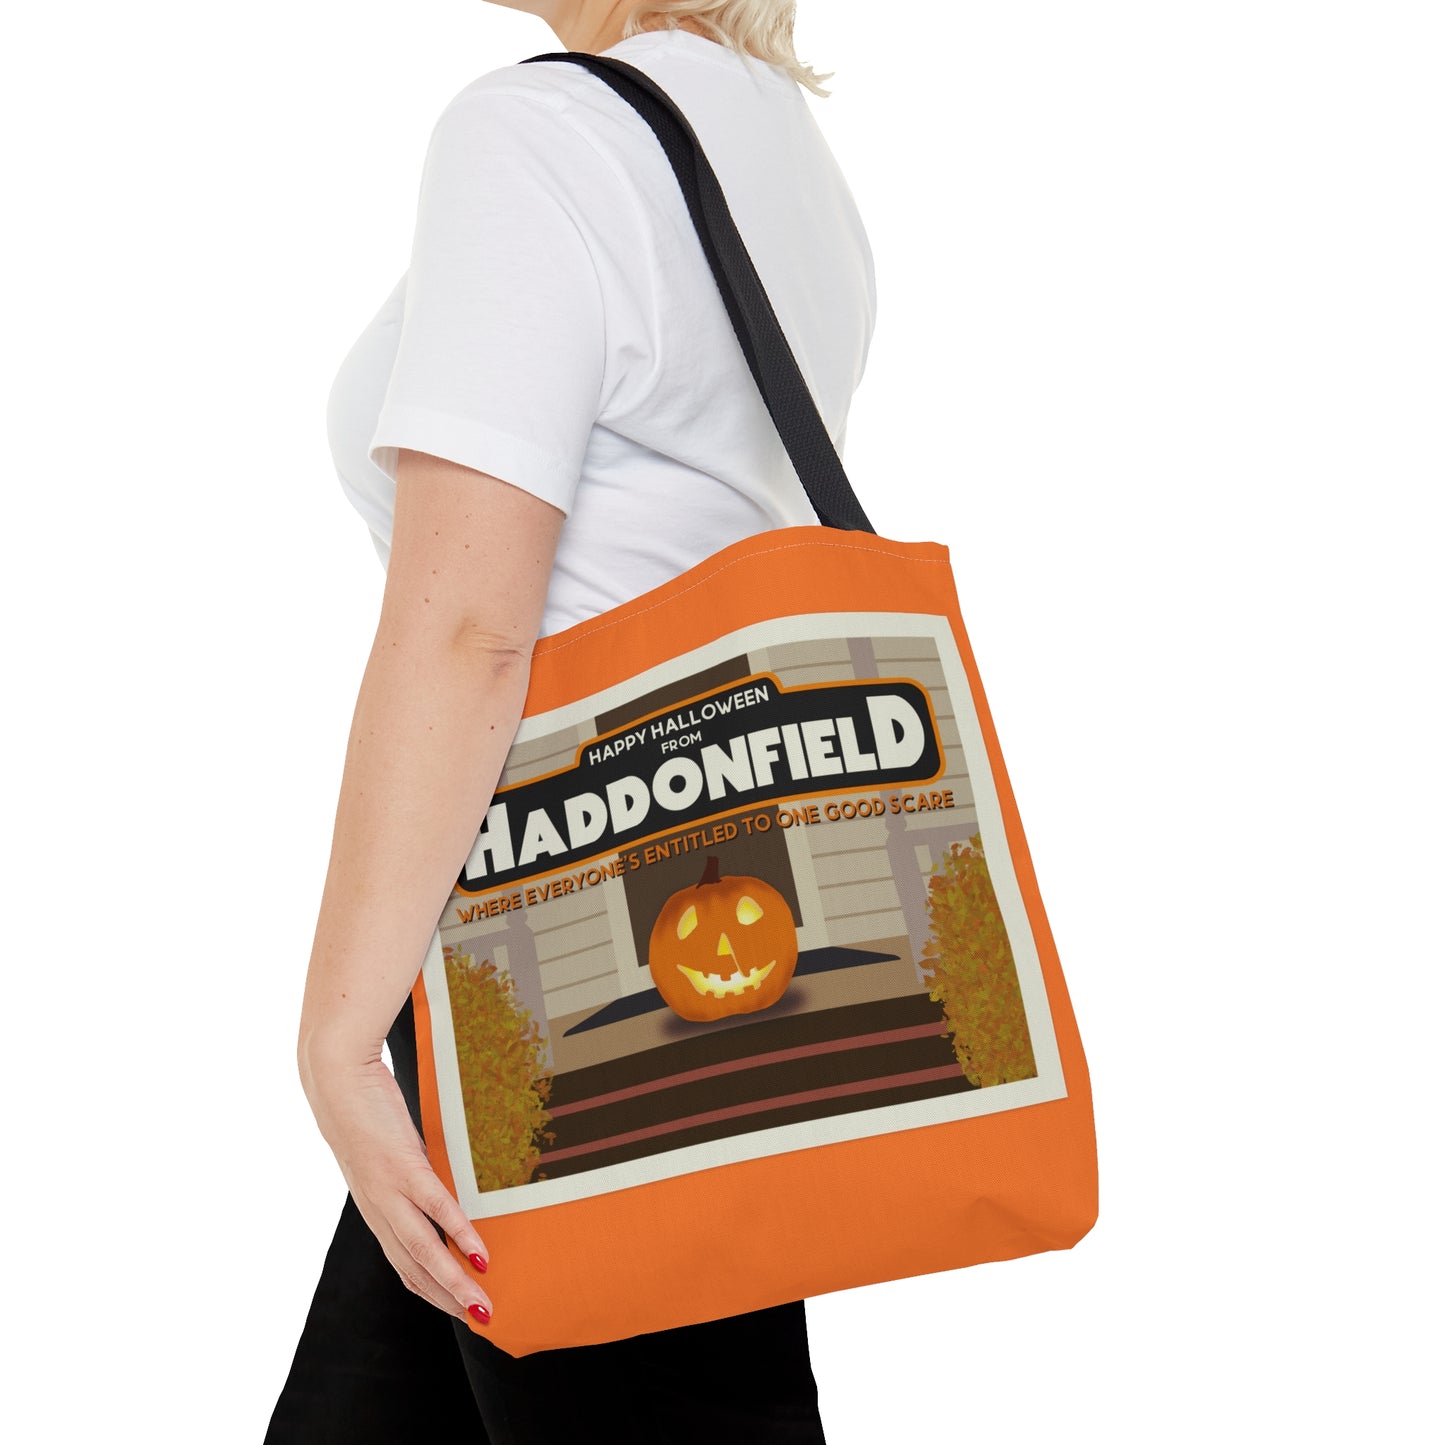 Haddonfield Halloween Tote Bag (Color)